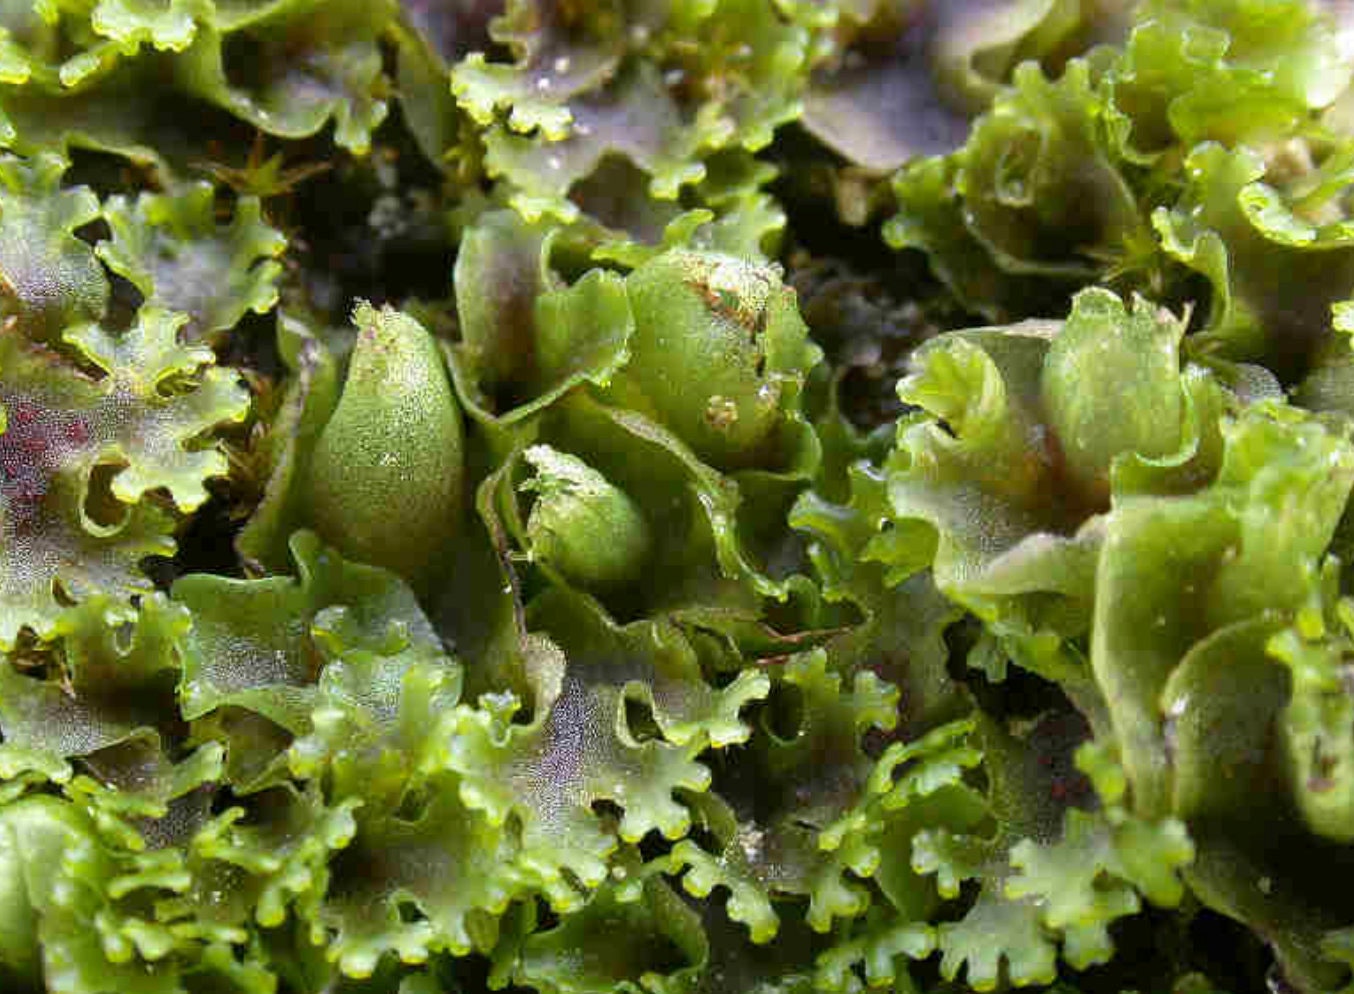 Terrarium Liverwort Endiviifolia with Phytosanitary certification and Passport, grown by moss supplier